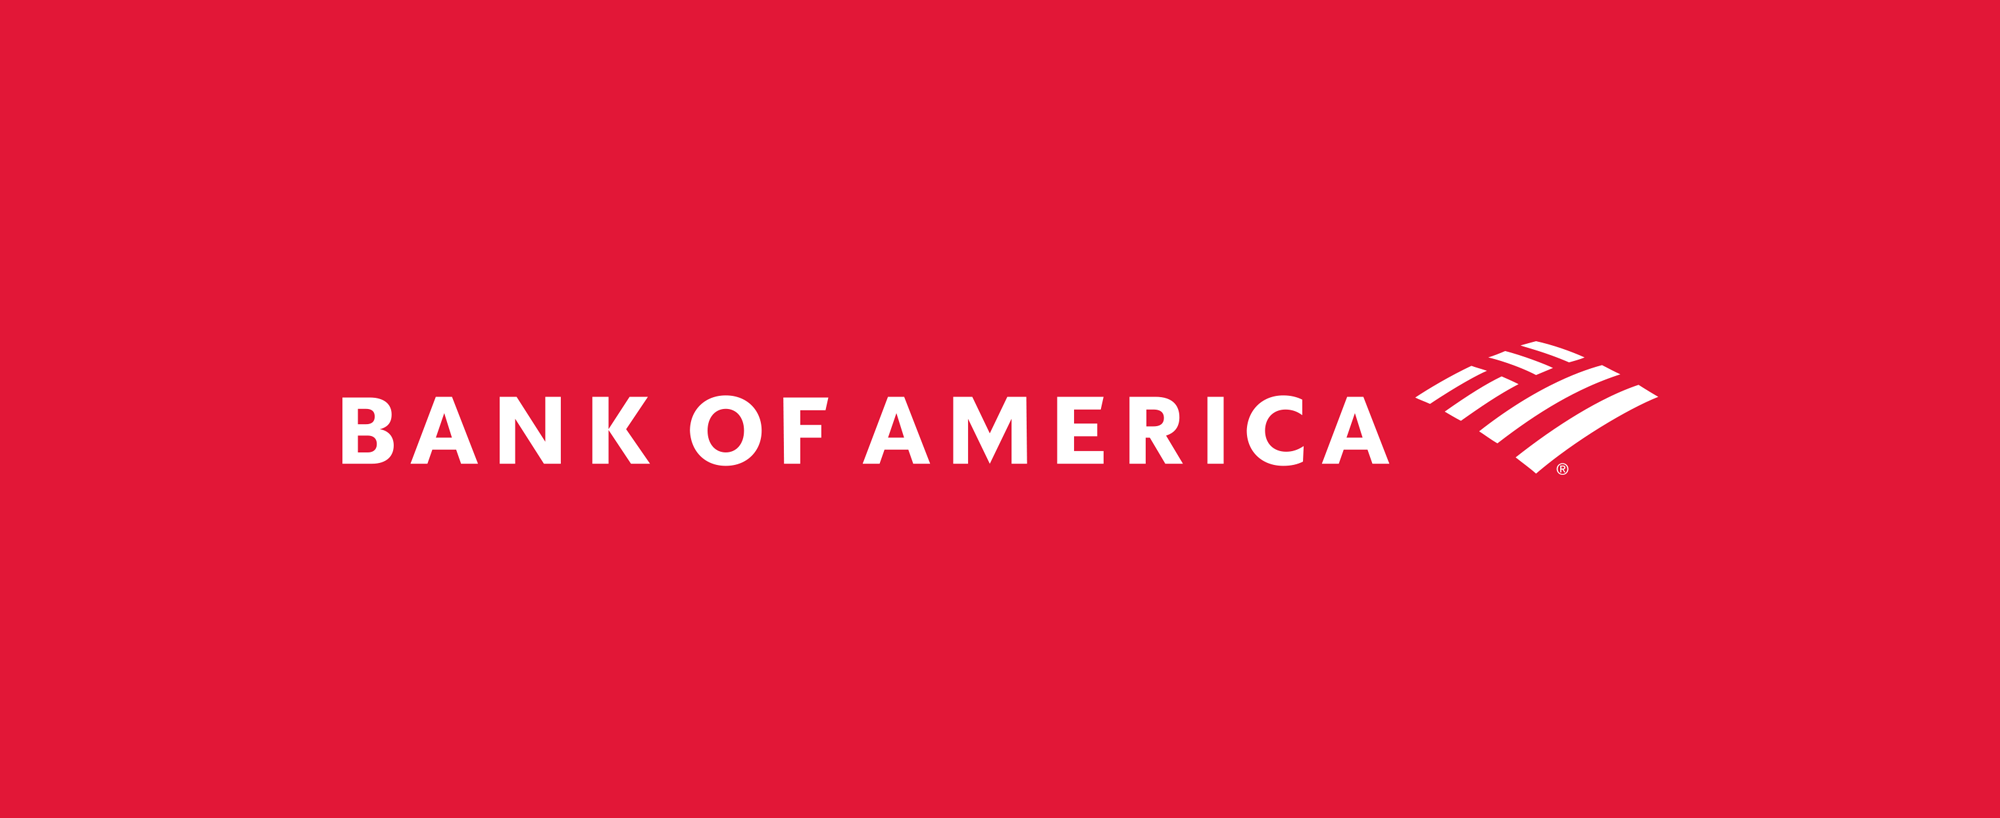 Bank Of America Logo PNG - 178762